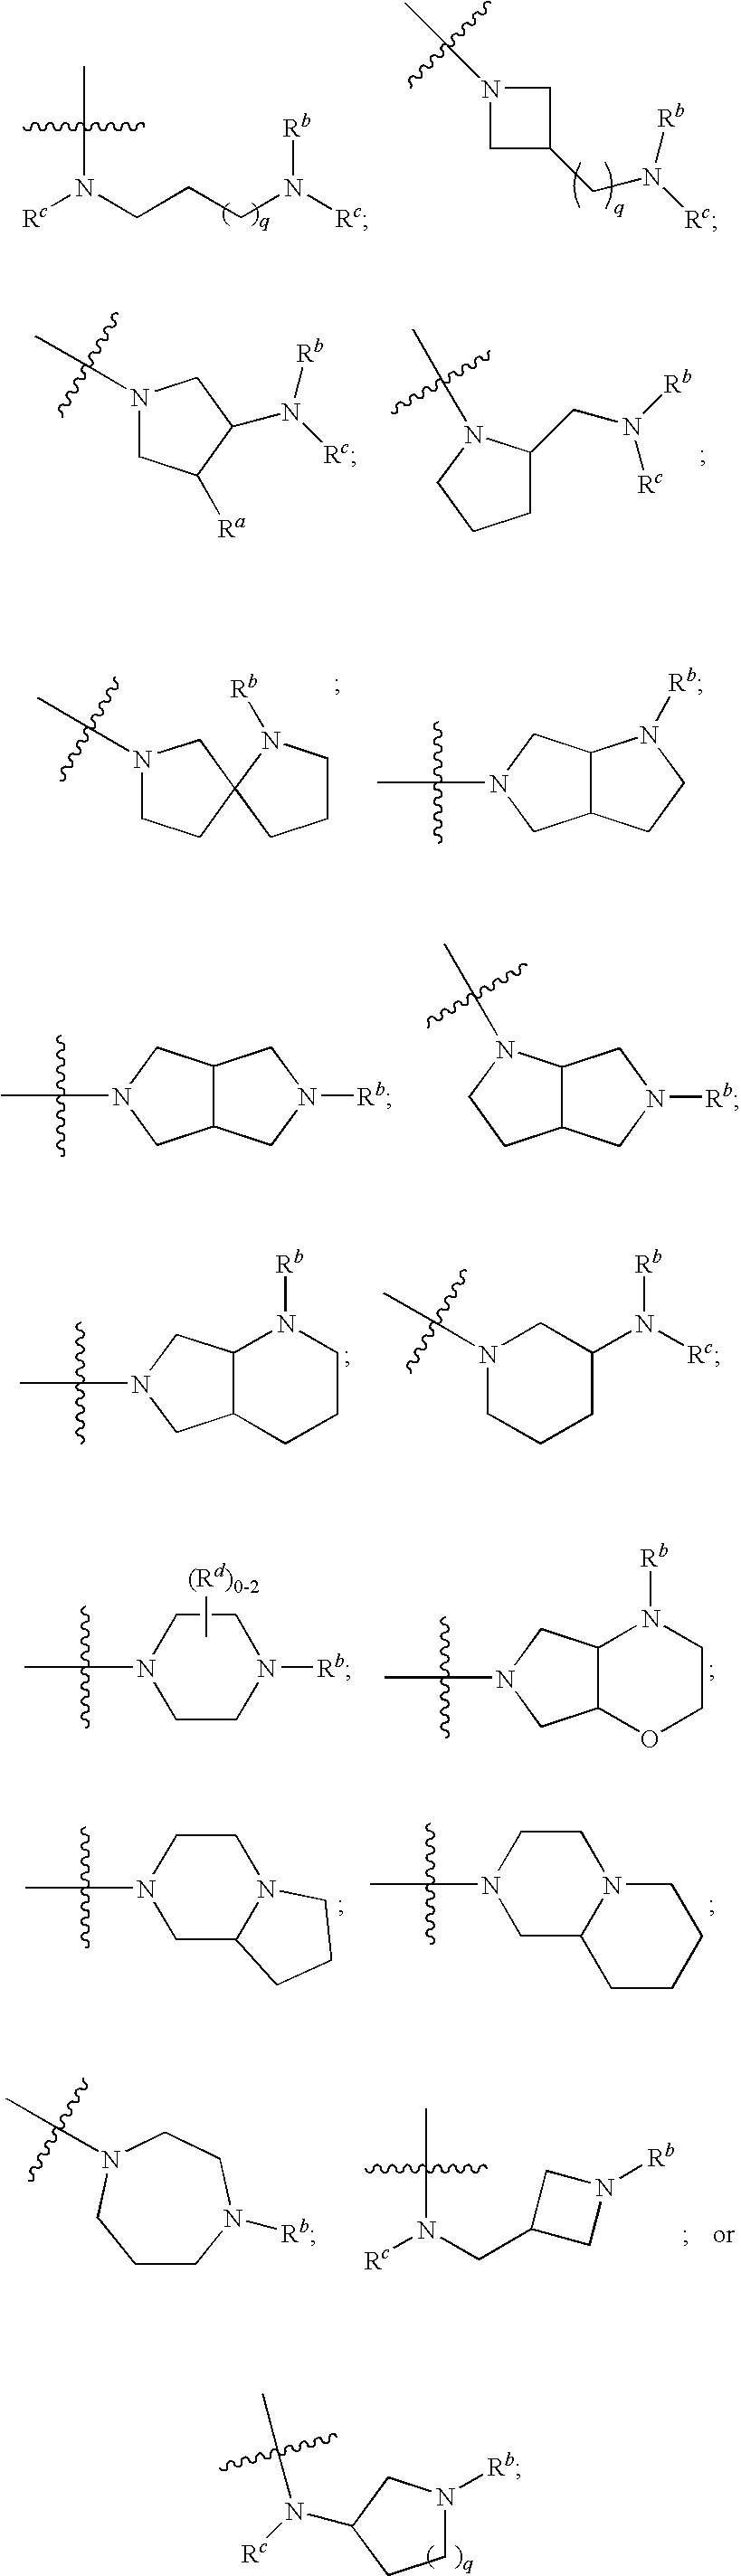 2-aminopyrimidine modulators of the histamine H<sub>4 </sub>receptor